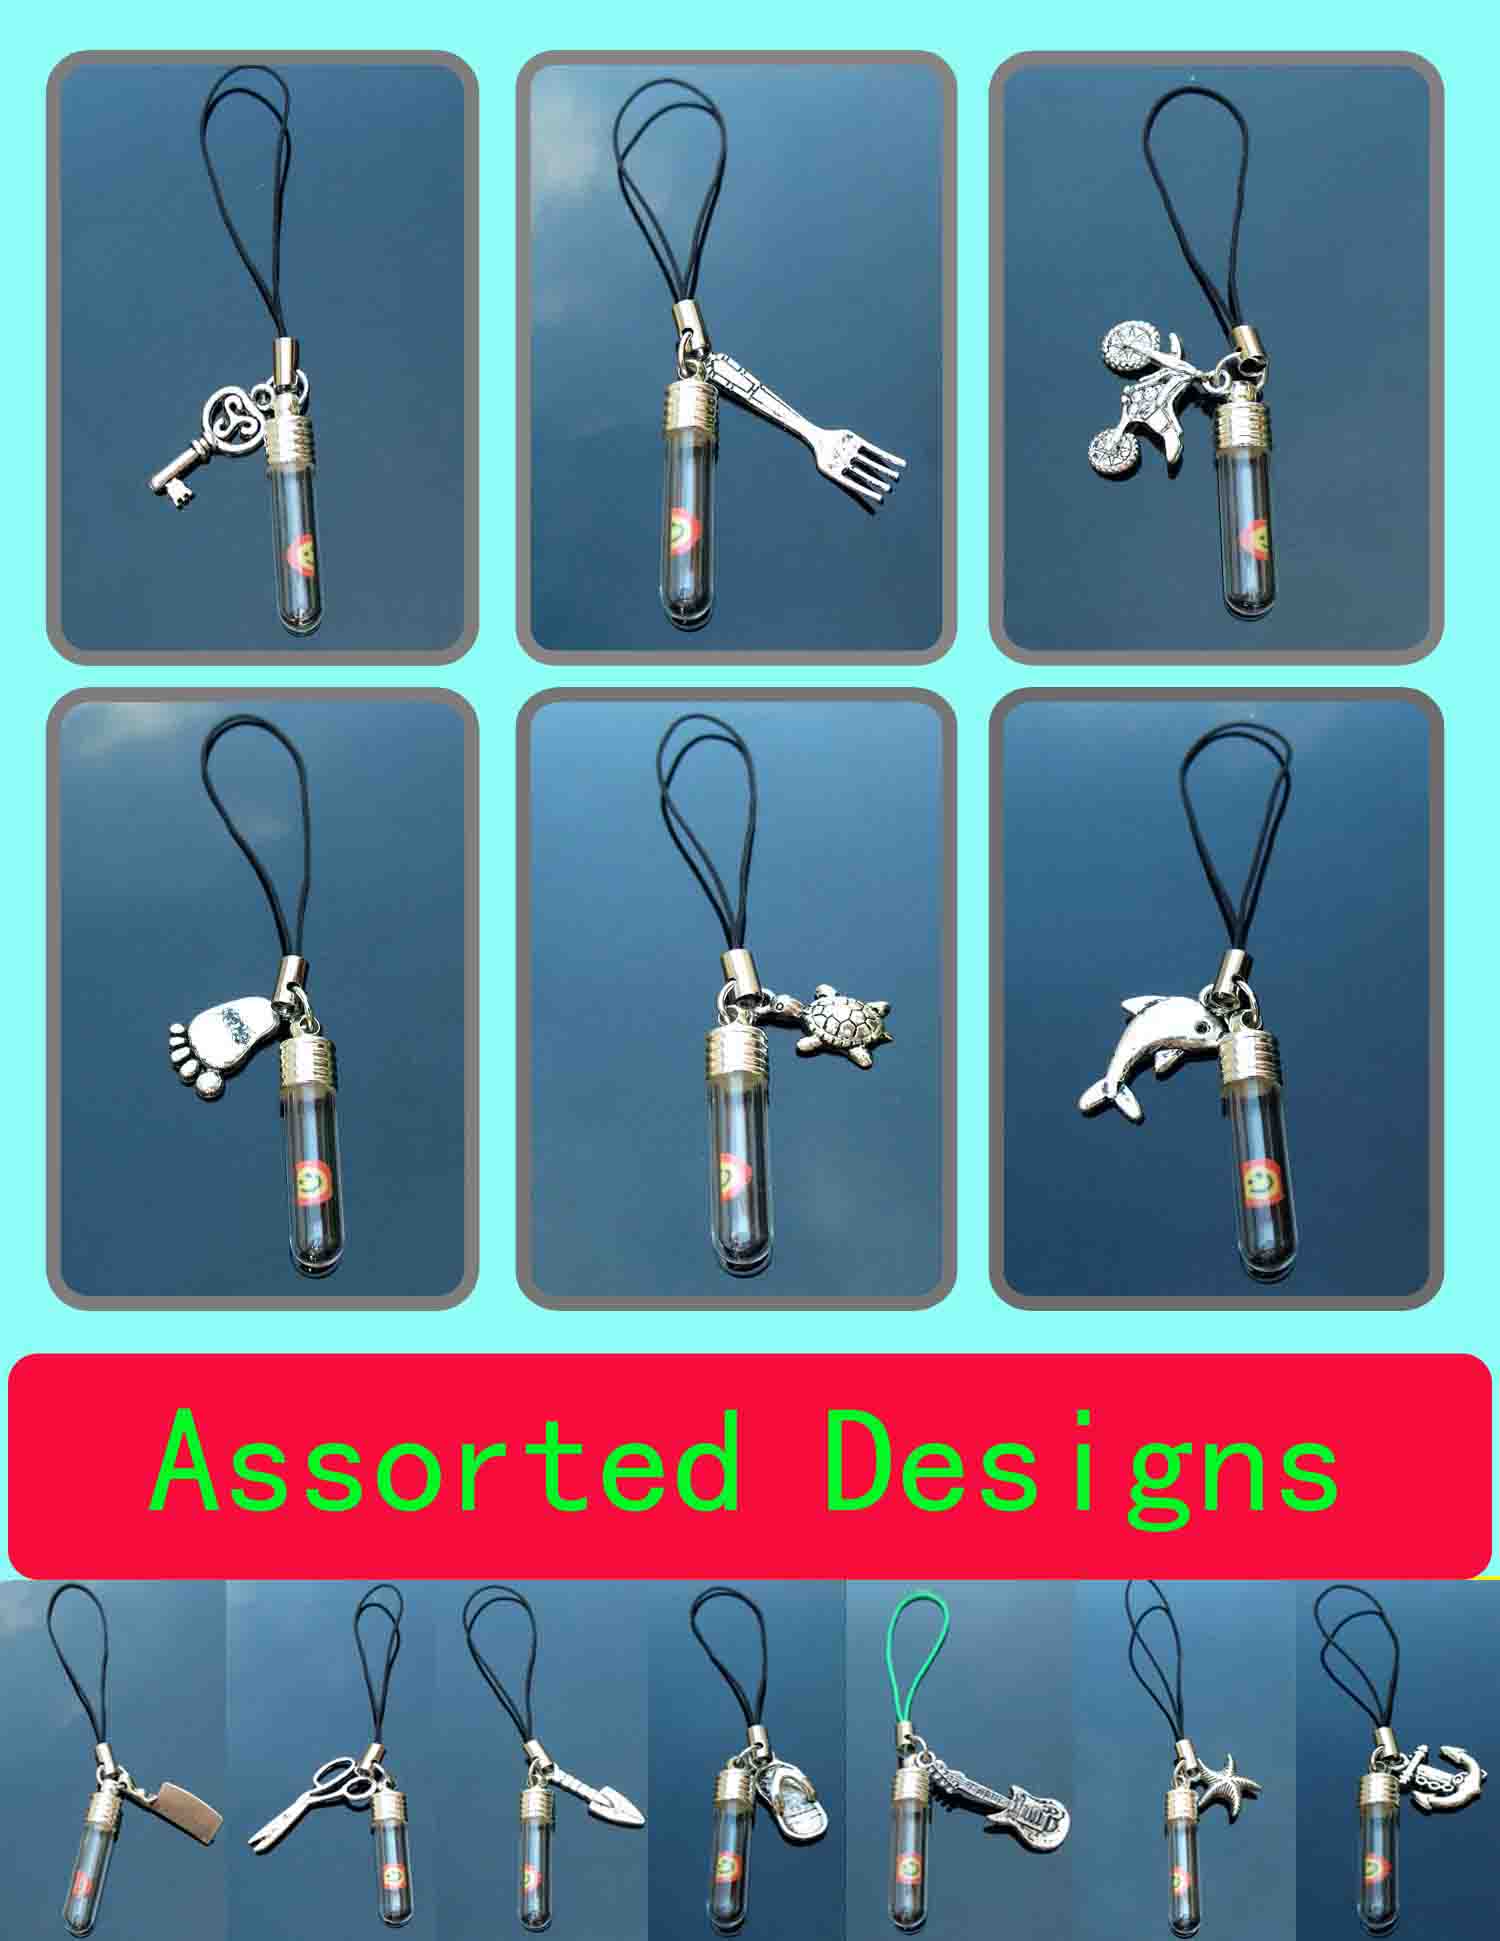 Trinkettes Charm Cellphone Strap(Tube Vial,6MM Metal Cap & Plastic Stopper,assorted designs)